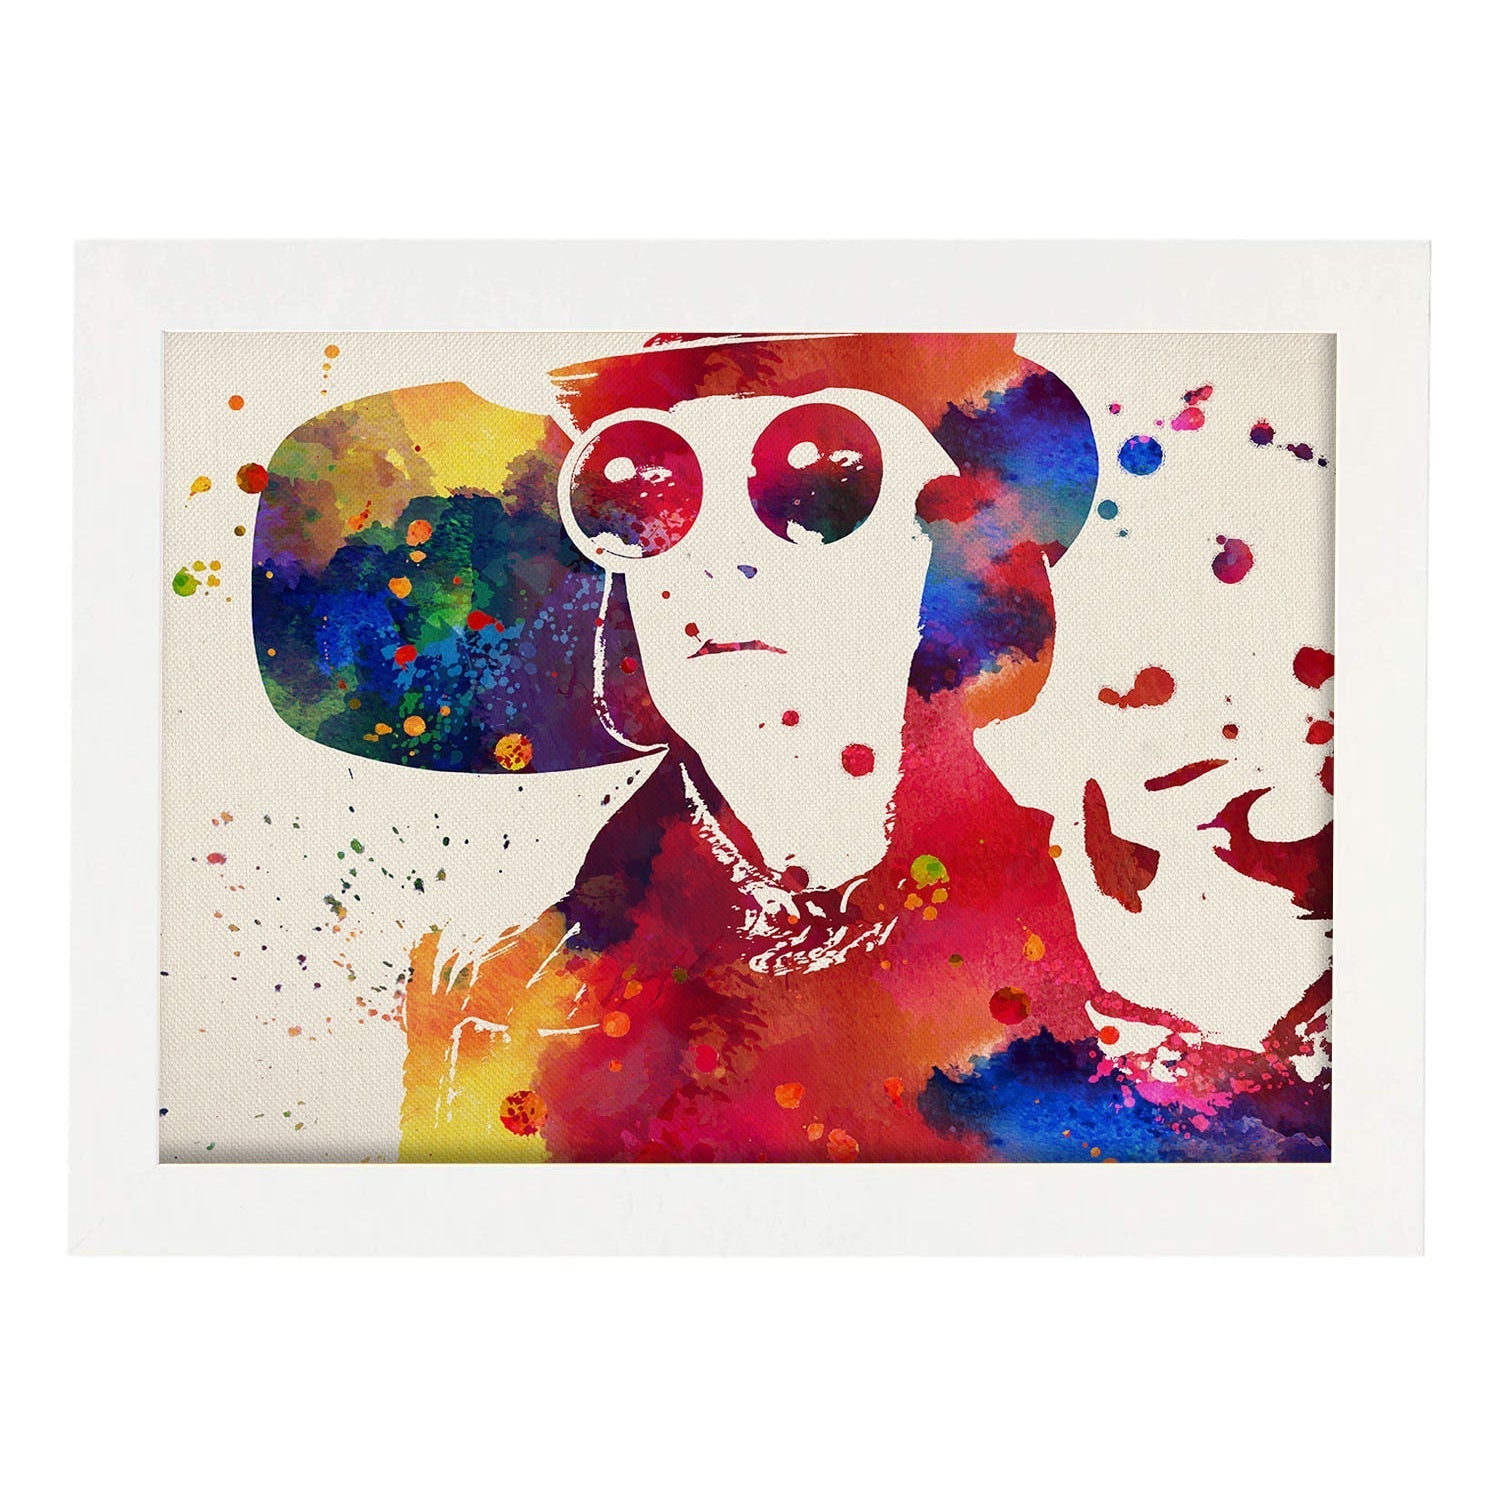 Poster de Willy Wonka con diseño acuarela. Mix de láminas con estilo acuarela-Artwork-Nacnic-A4-Marco Blanco-Nacnic Estudio SL